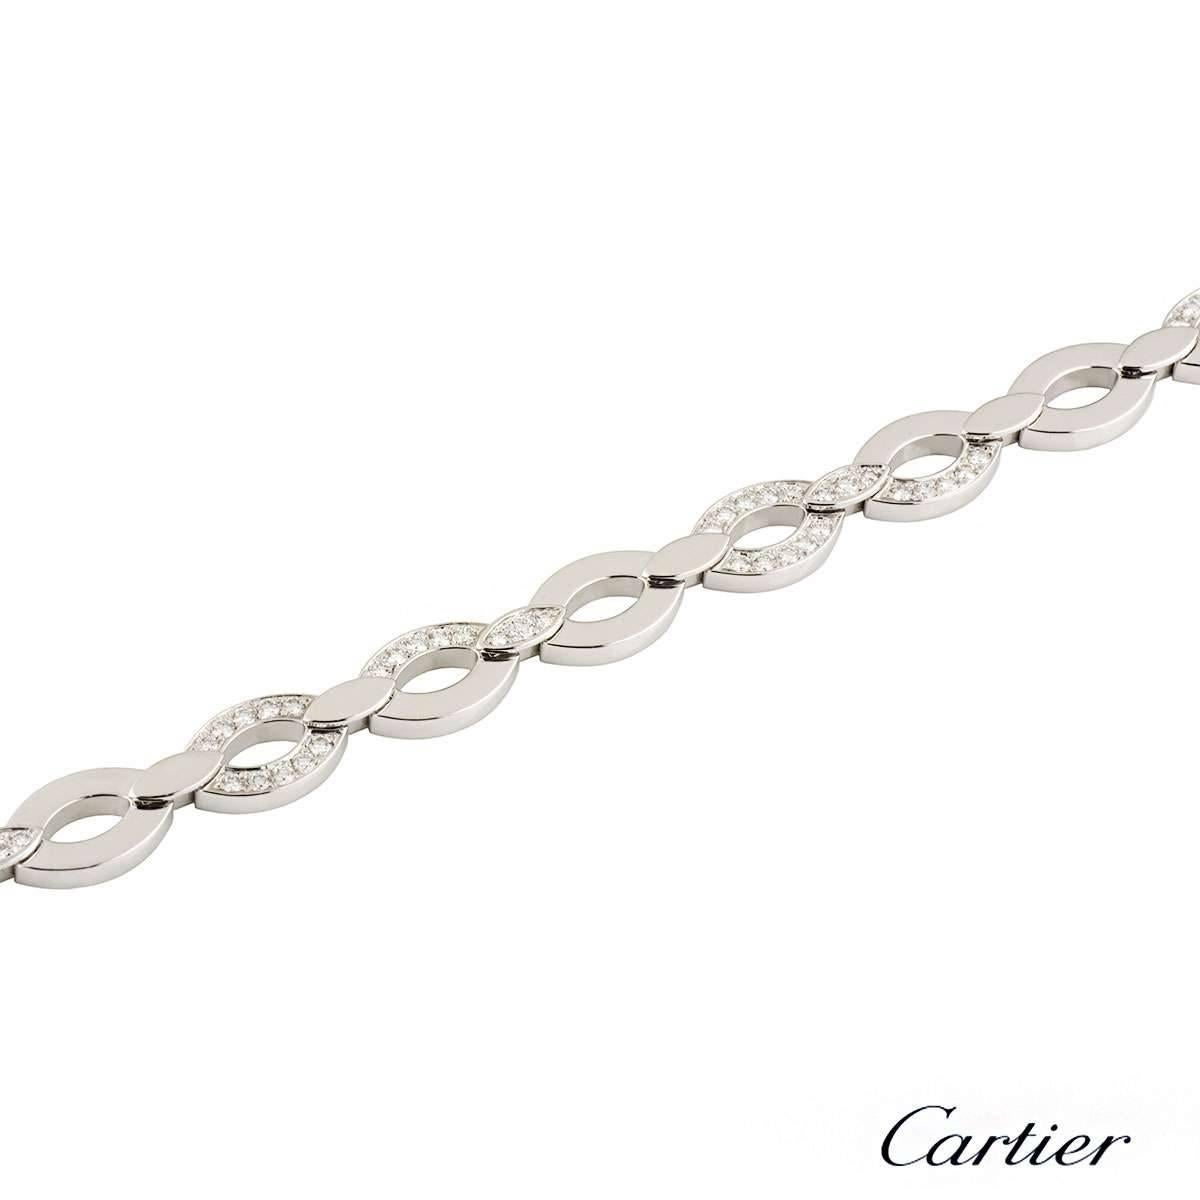 Cartier Daidea Diamond Necklace, Bracelet and Earring Suite 1